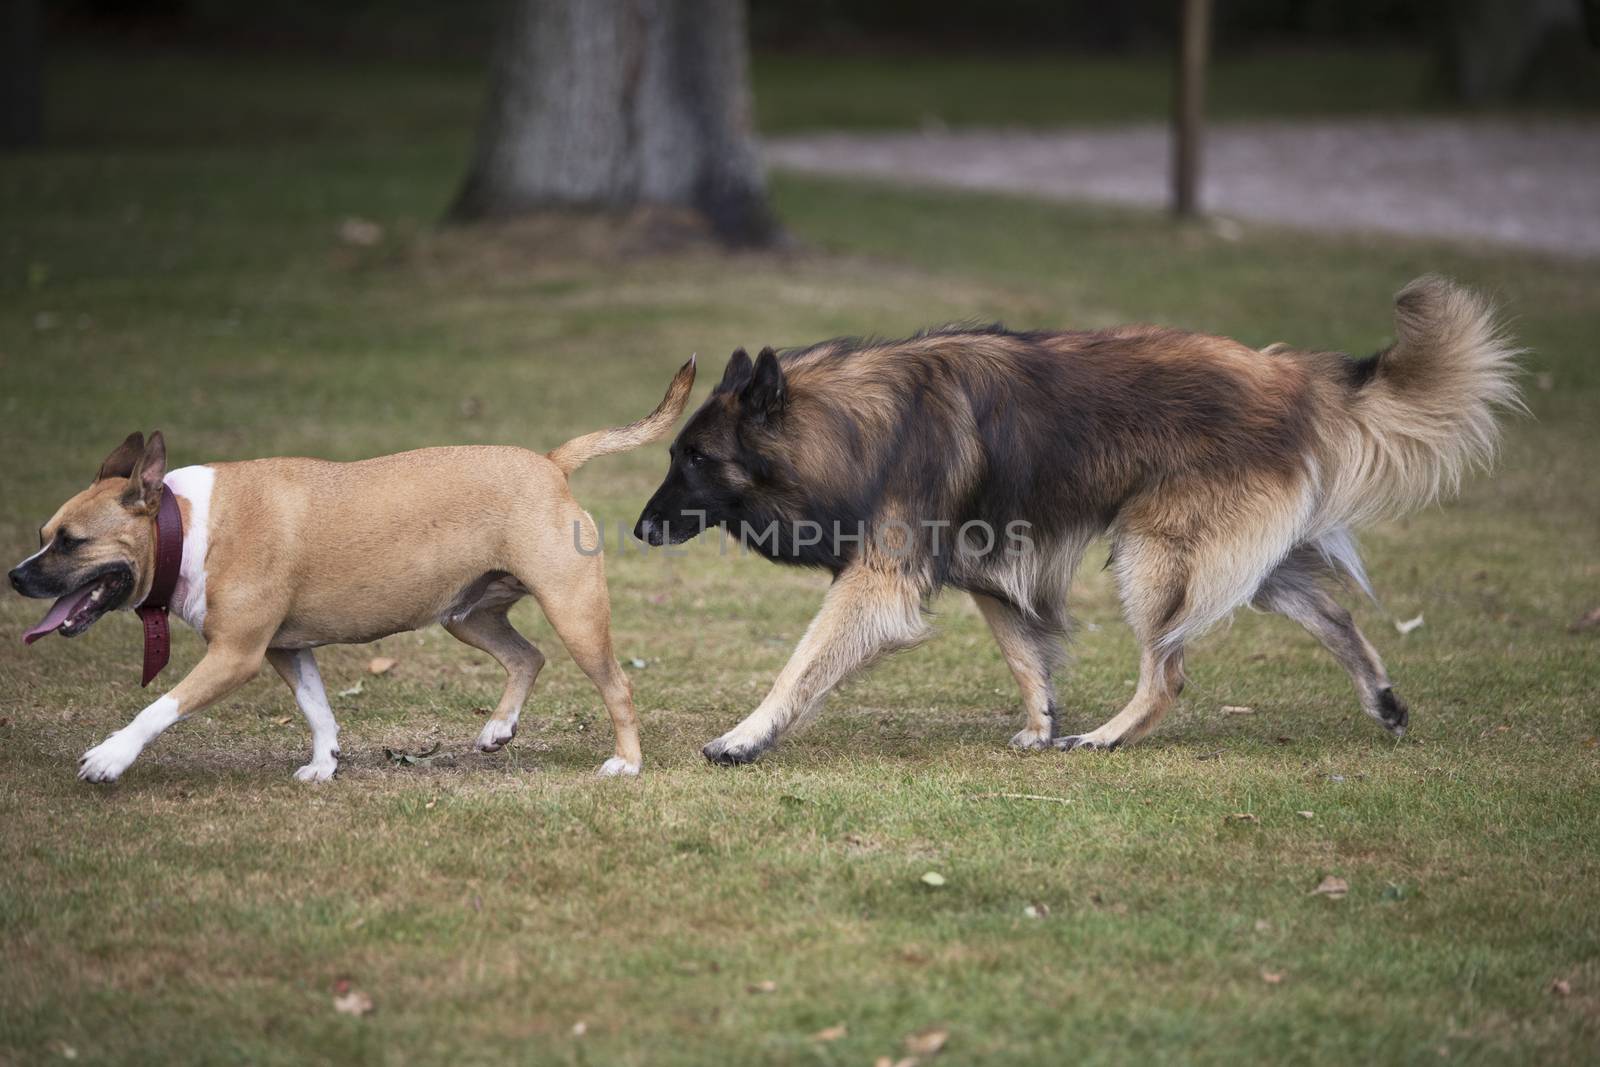 Two dogs, Staffordshire bull terrier and belgian shepherd tervuren, chasing each other